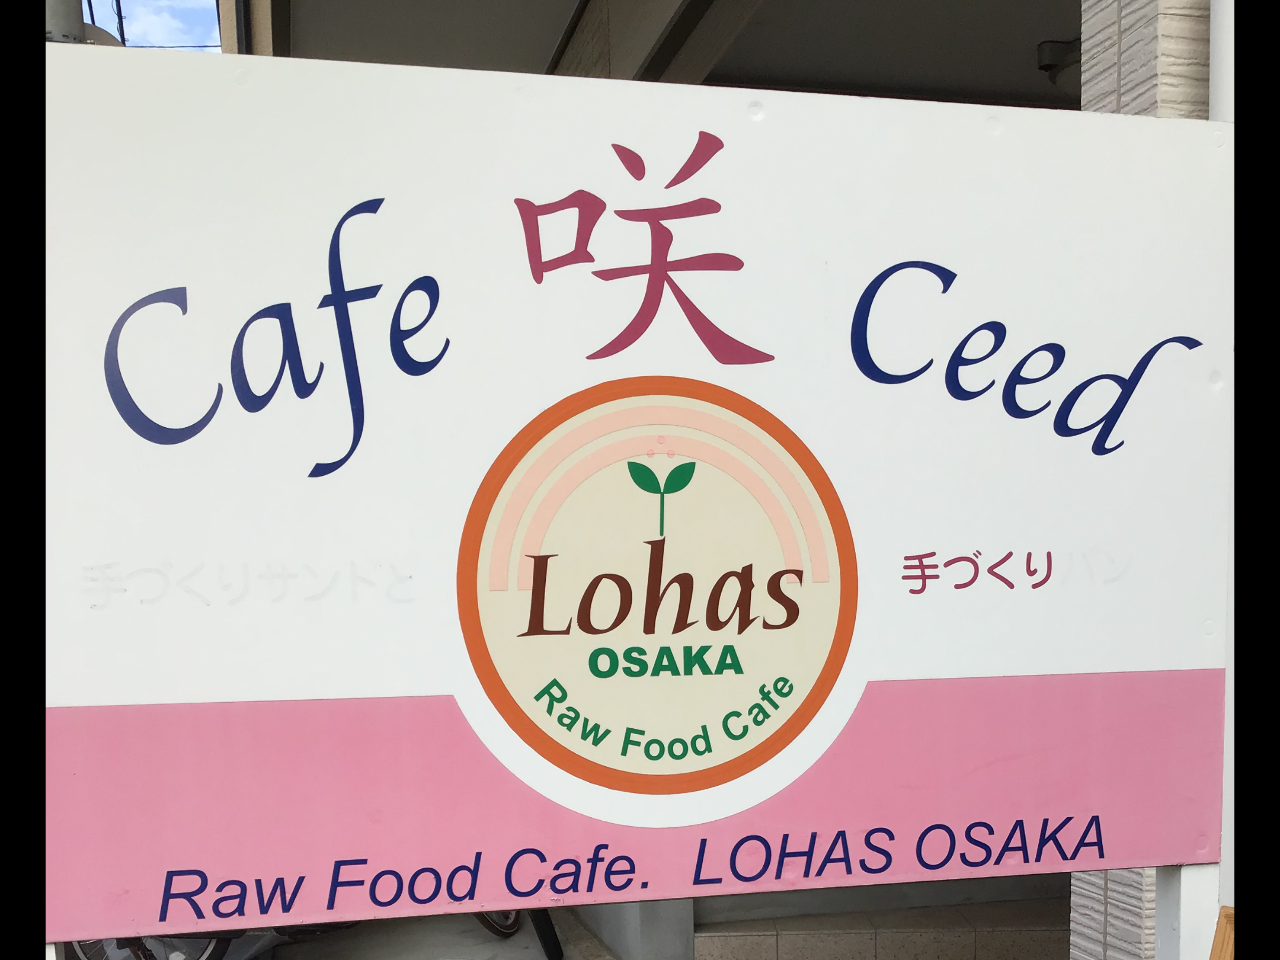 LOHAS OSAKA Cafe 咲 ceed